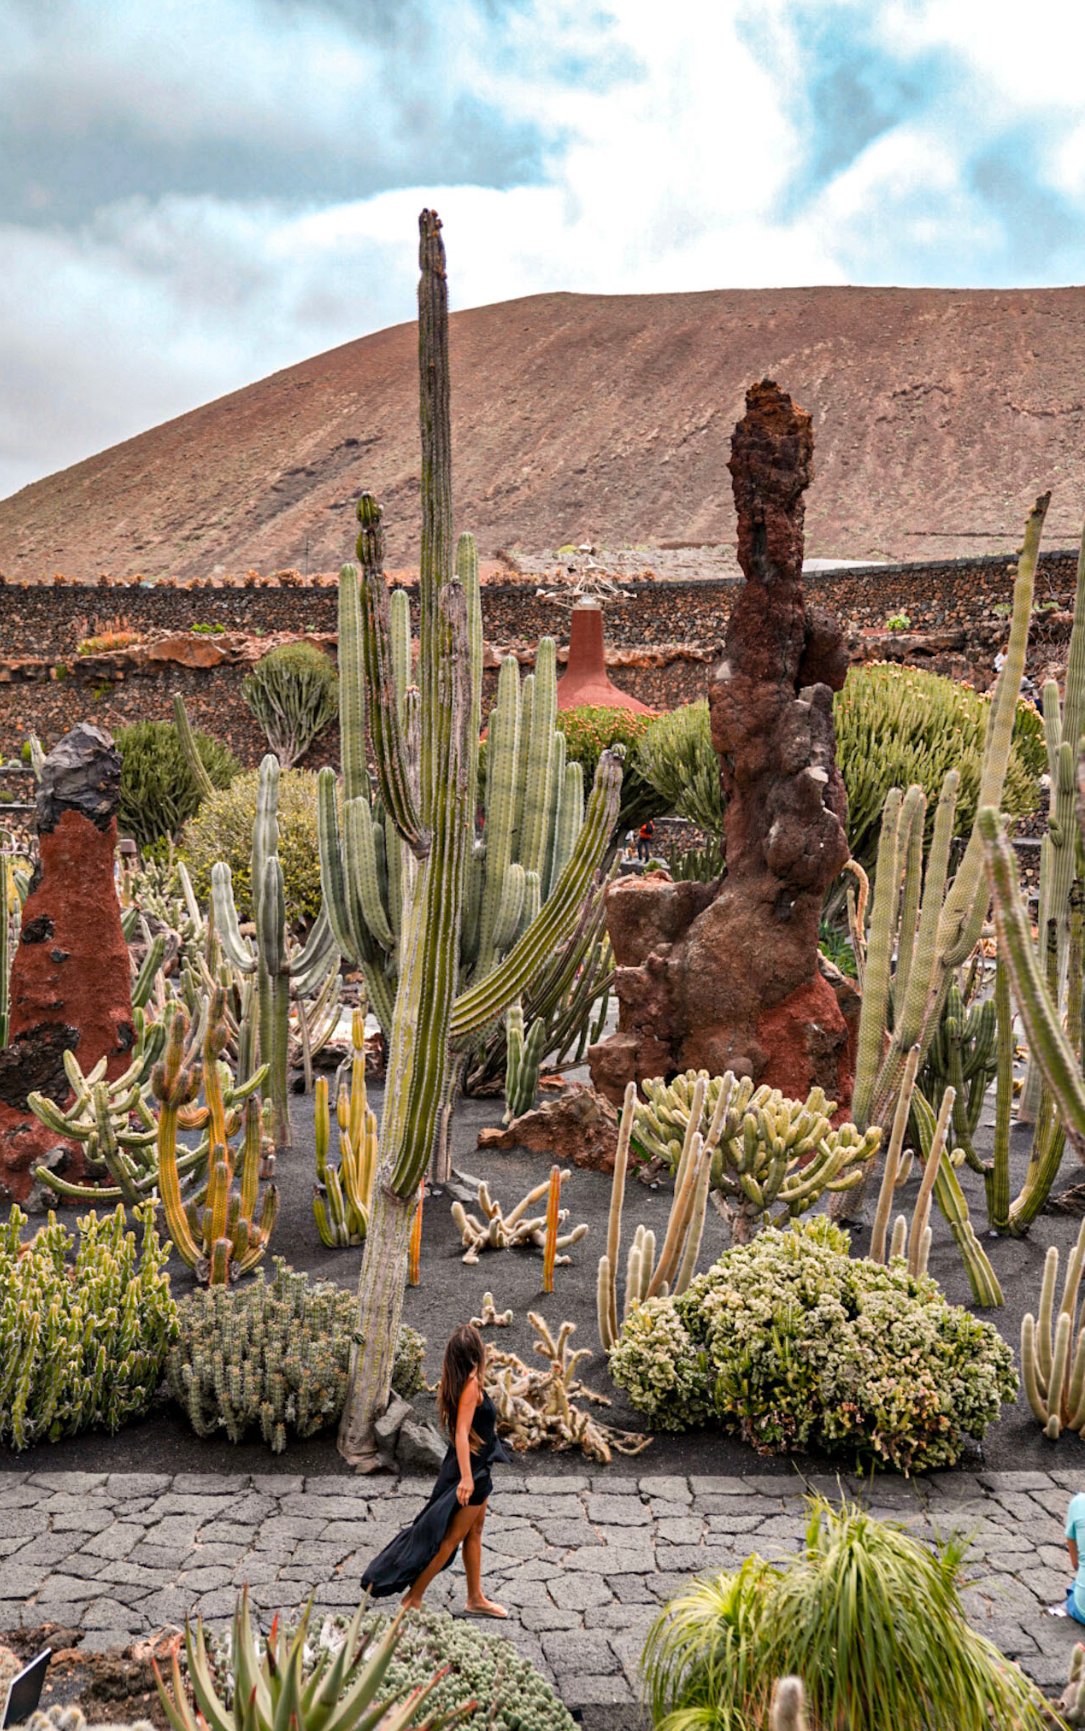 Cactus Garden in Lanzarote in the Canary Islands